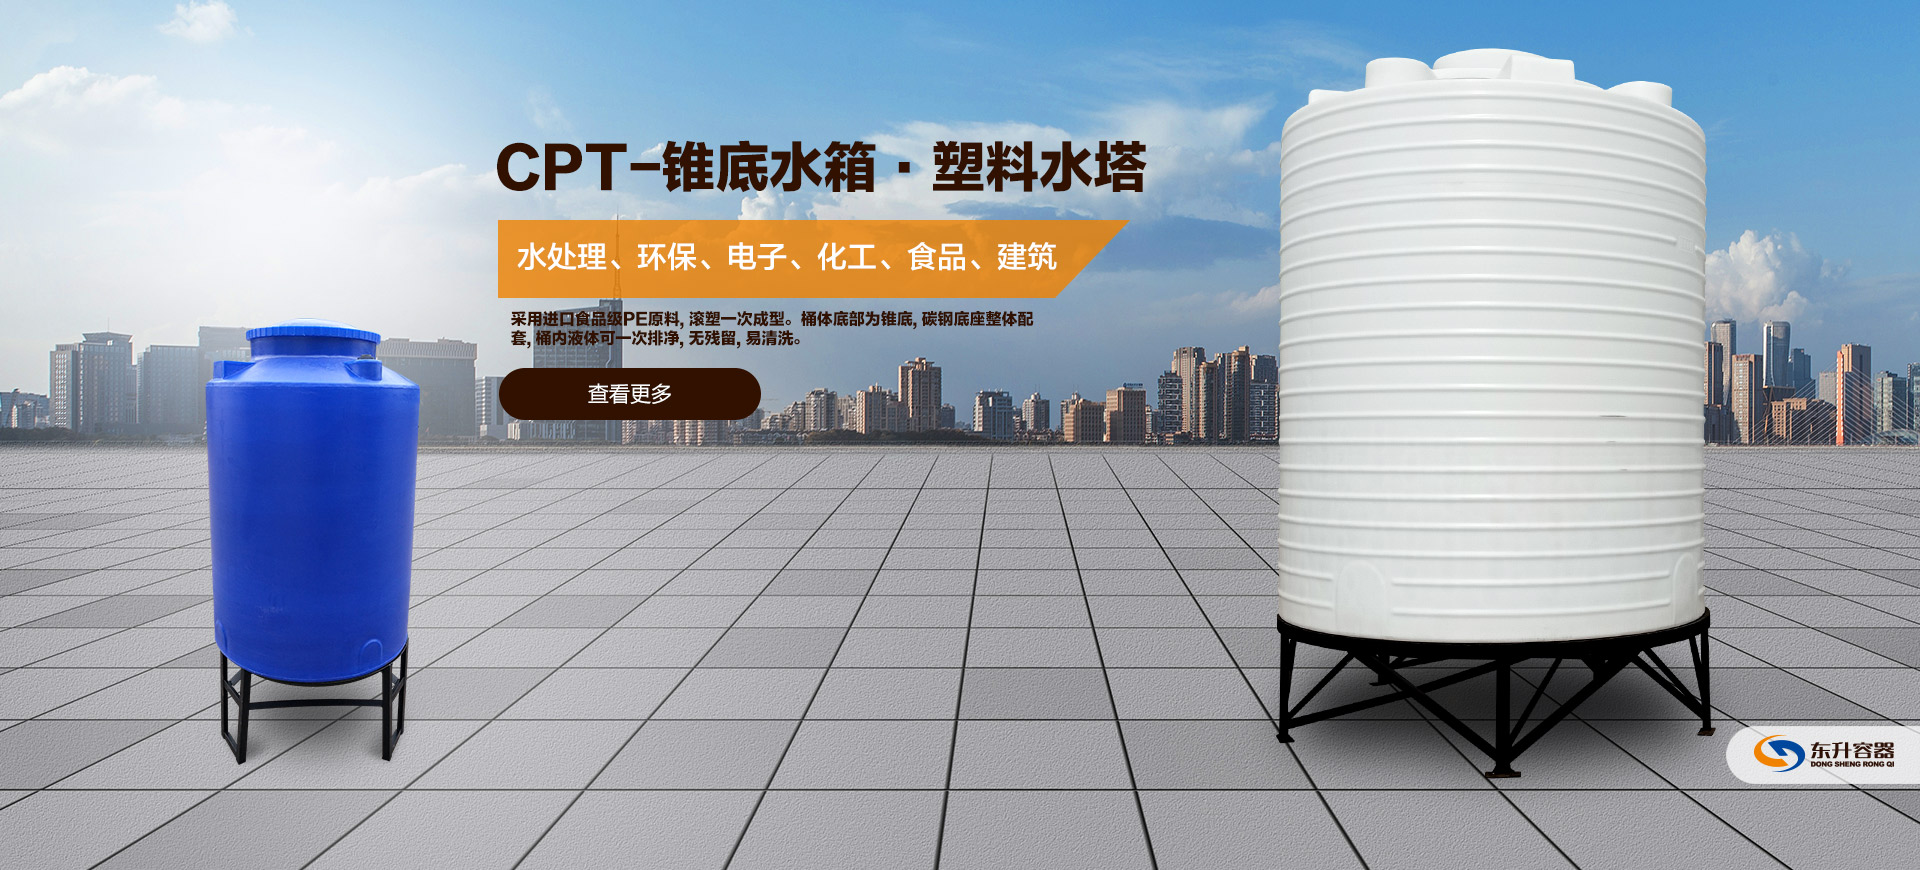 CPT-锥底水箱·塑料水塔